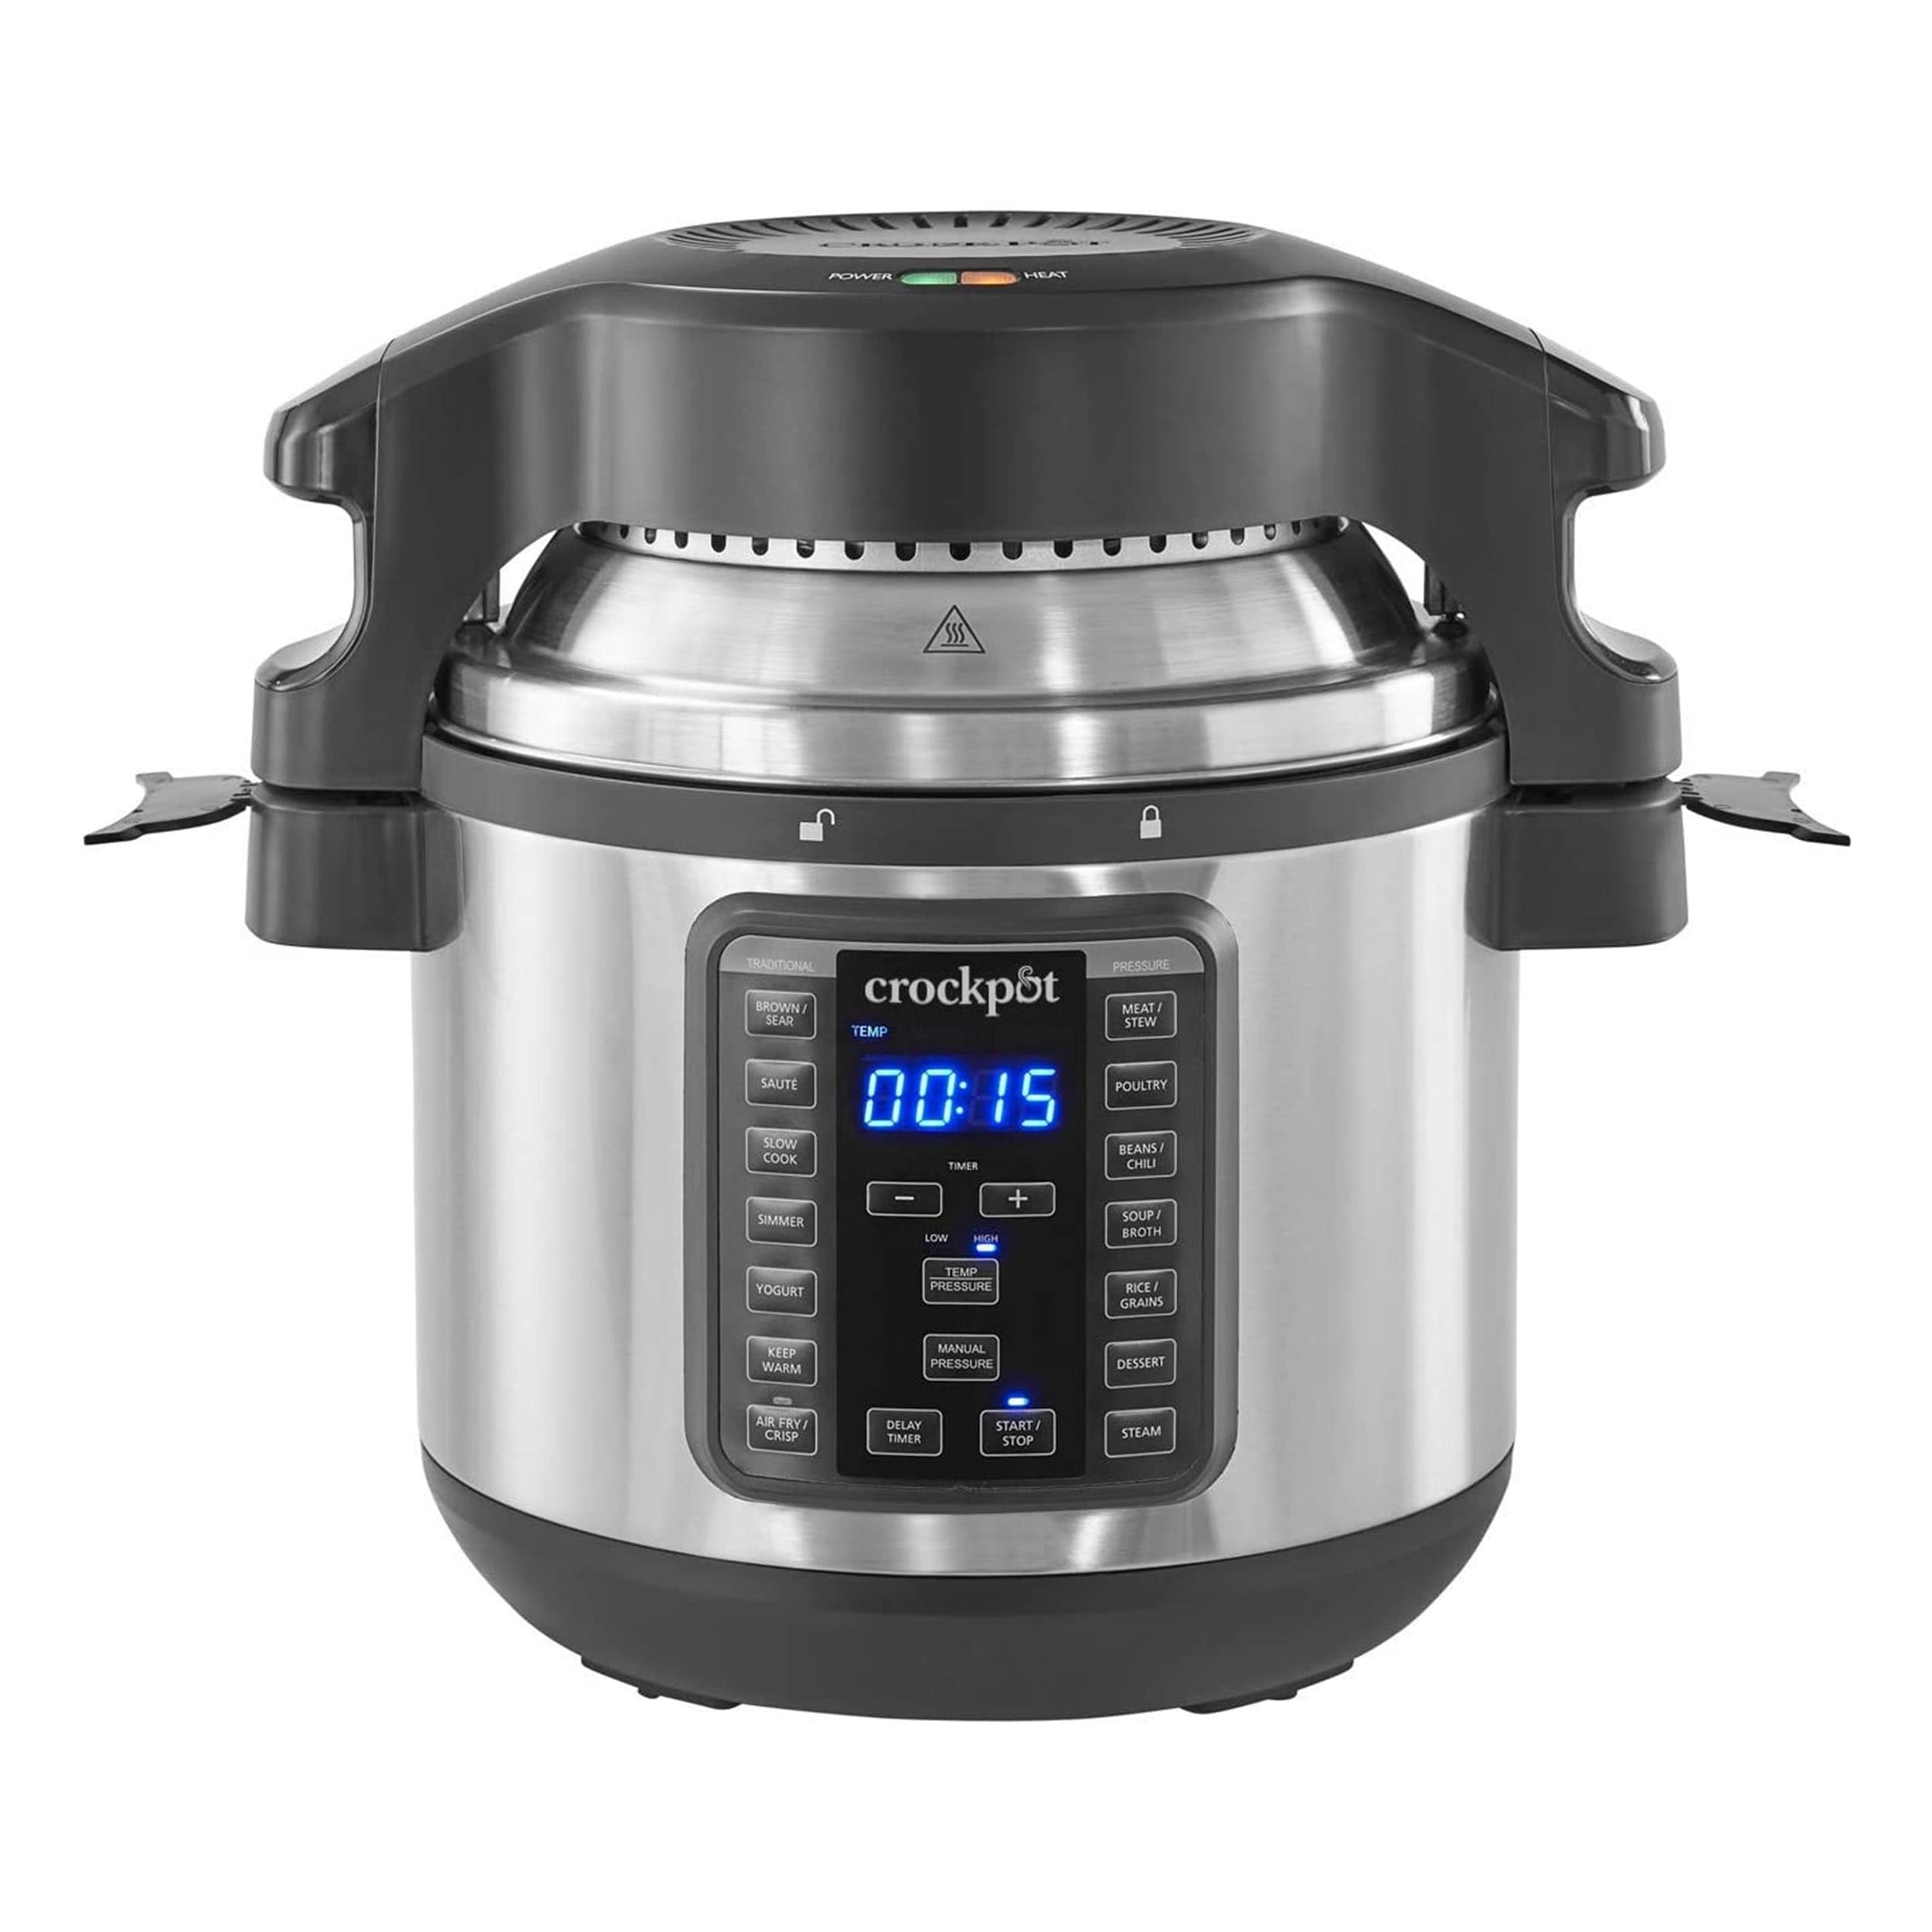 Crock-Pot Express 6-Qt Oval Multi-Cooker Review - Consumer Reports